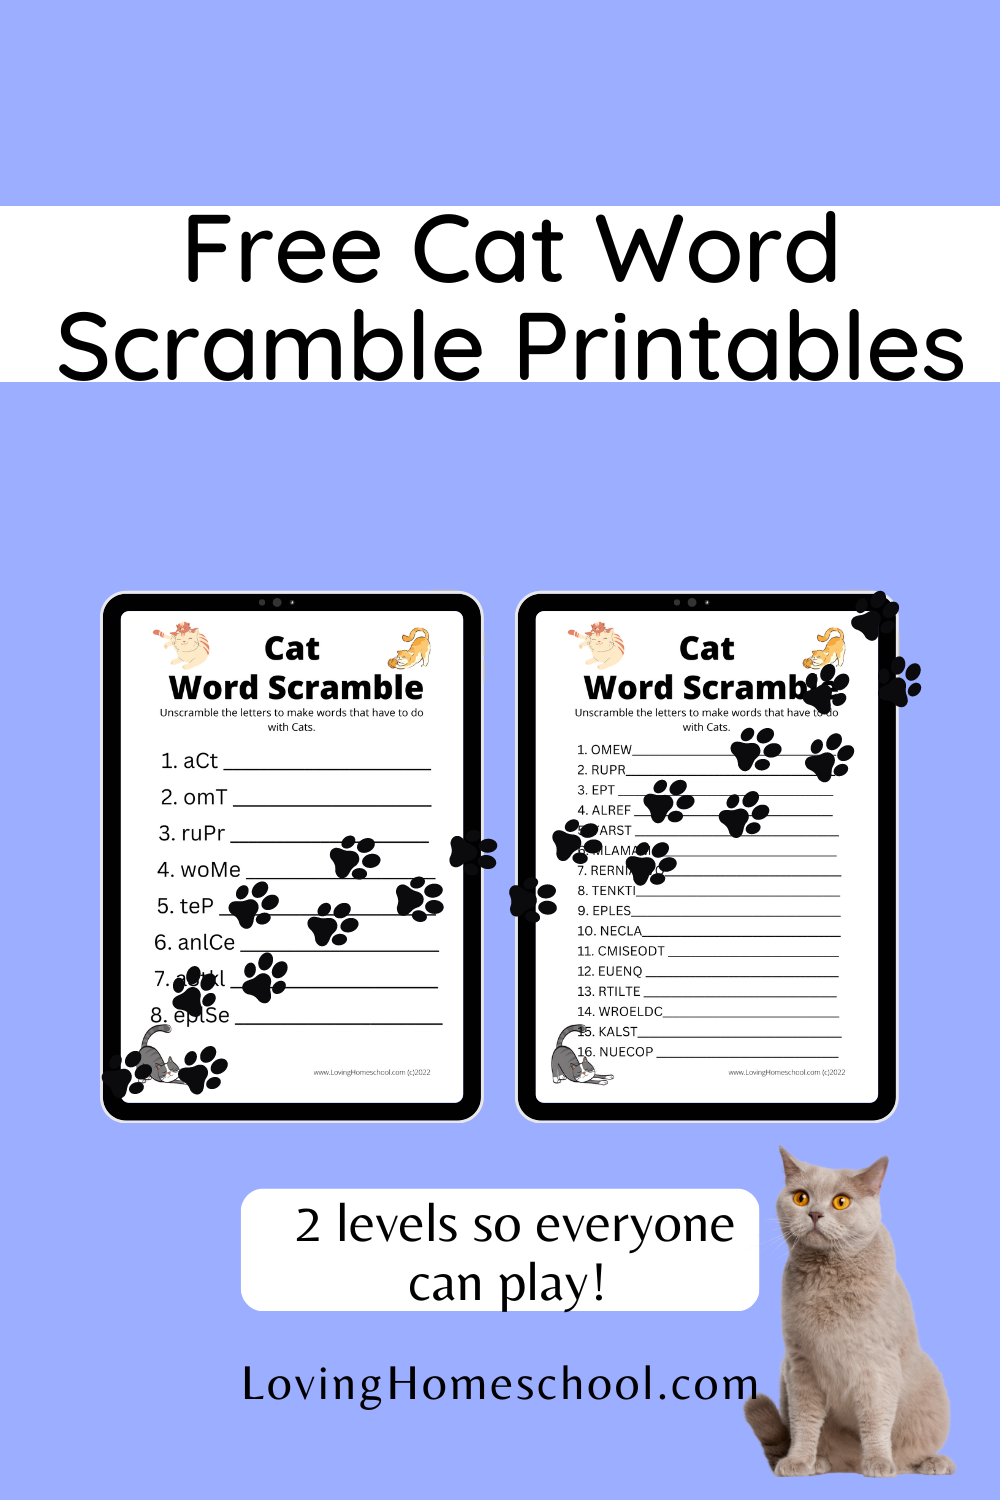 Cat Word Scramble Printables Pinterest Pin